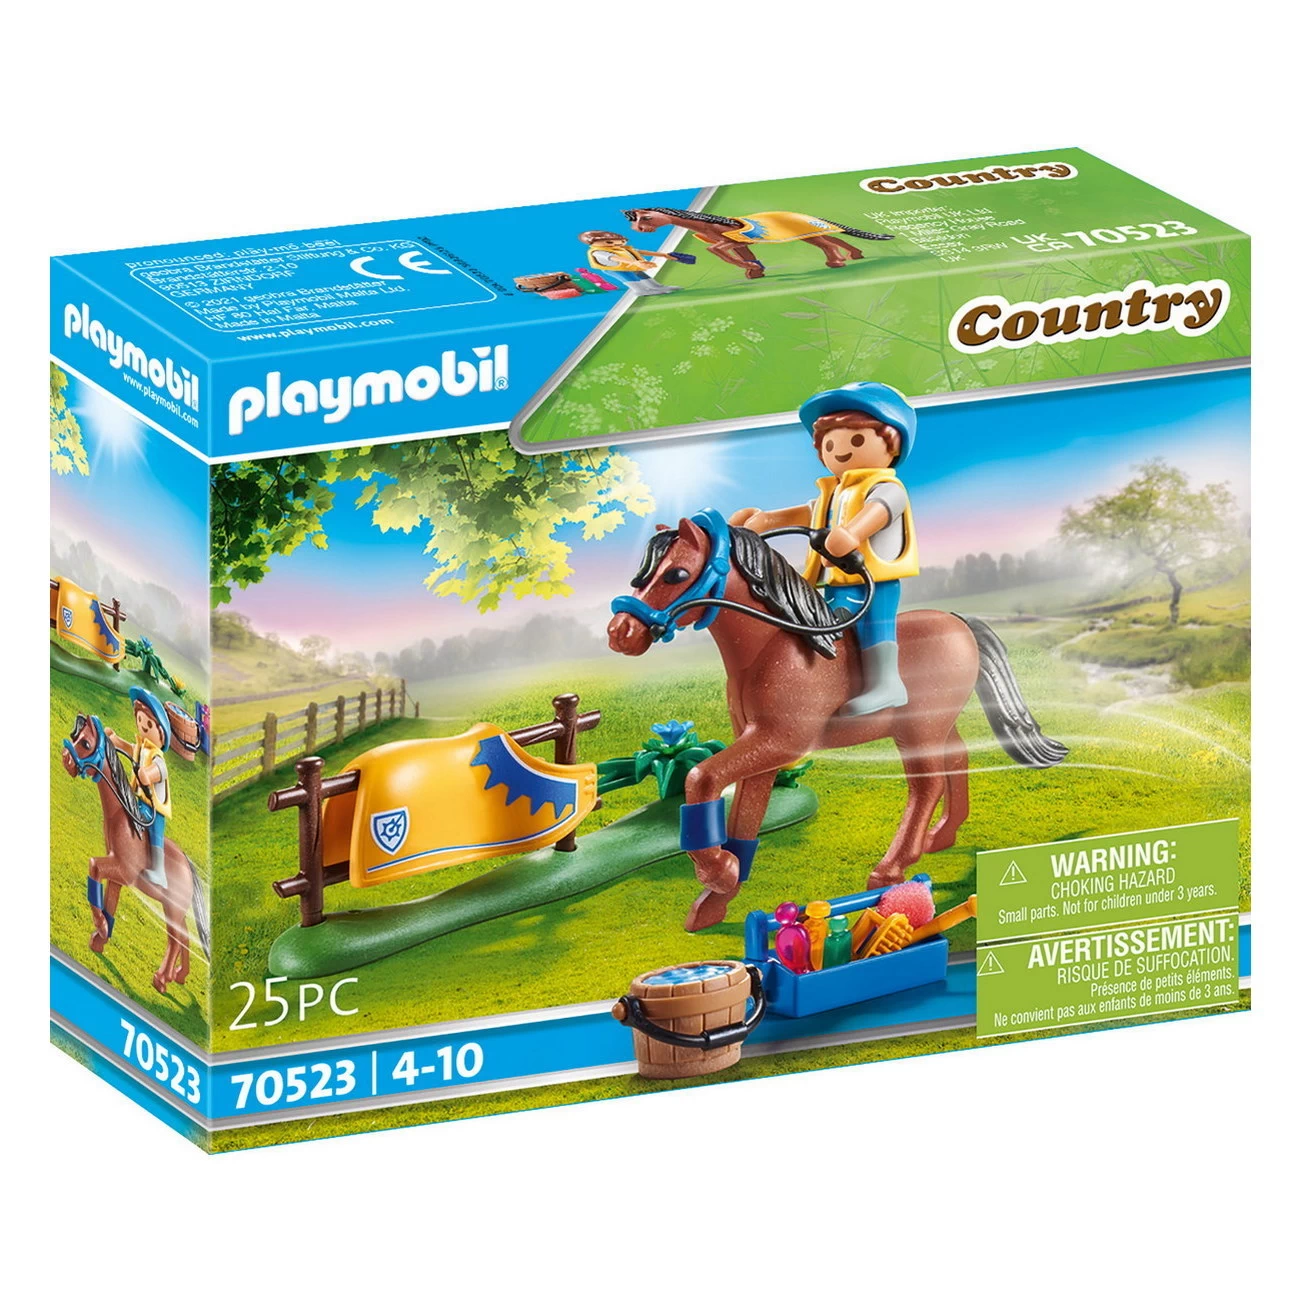 Playmobil 70523 - Sammelpony Welsh (Country)